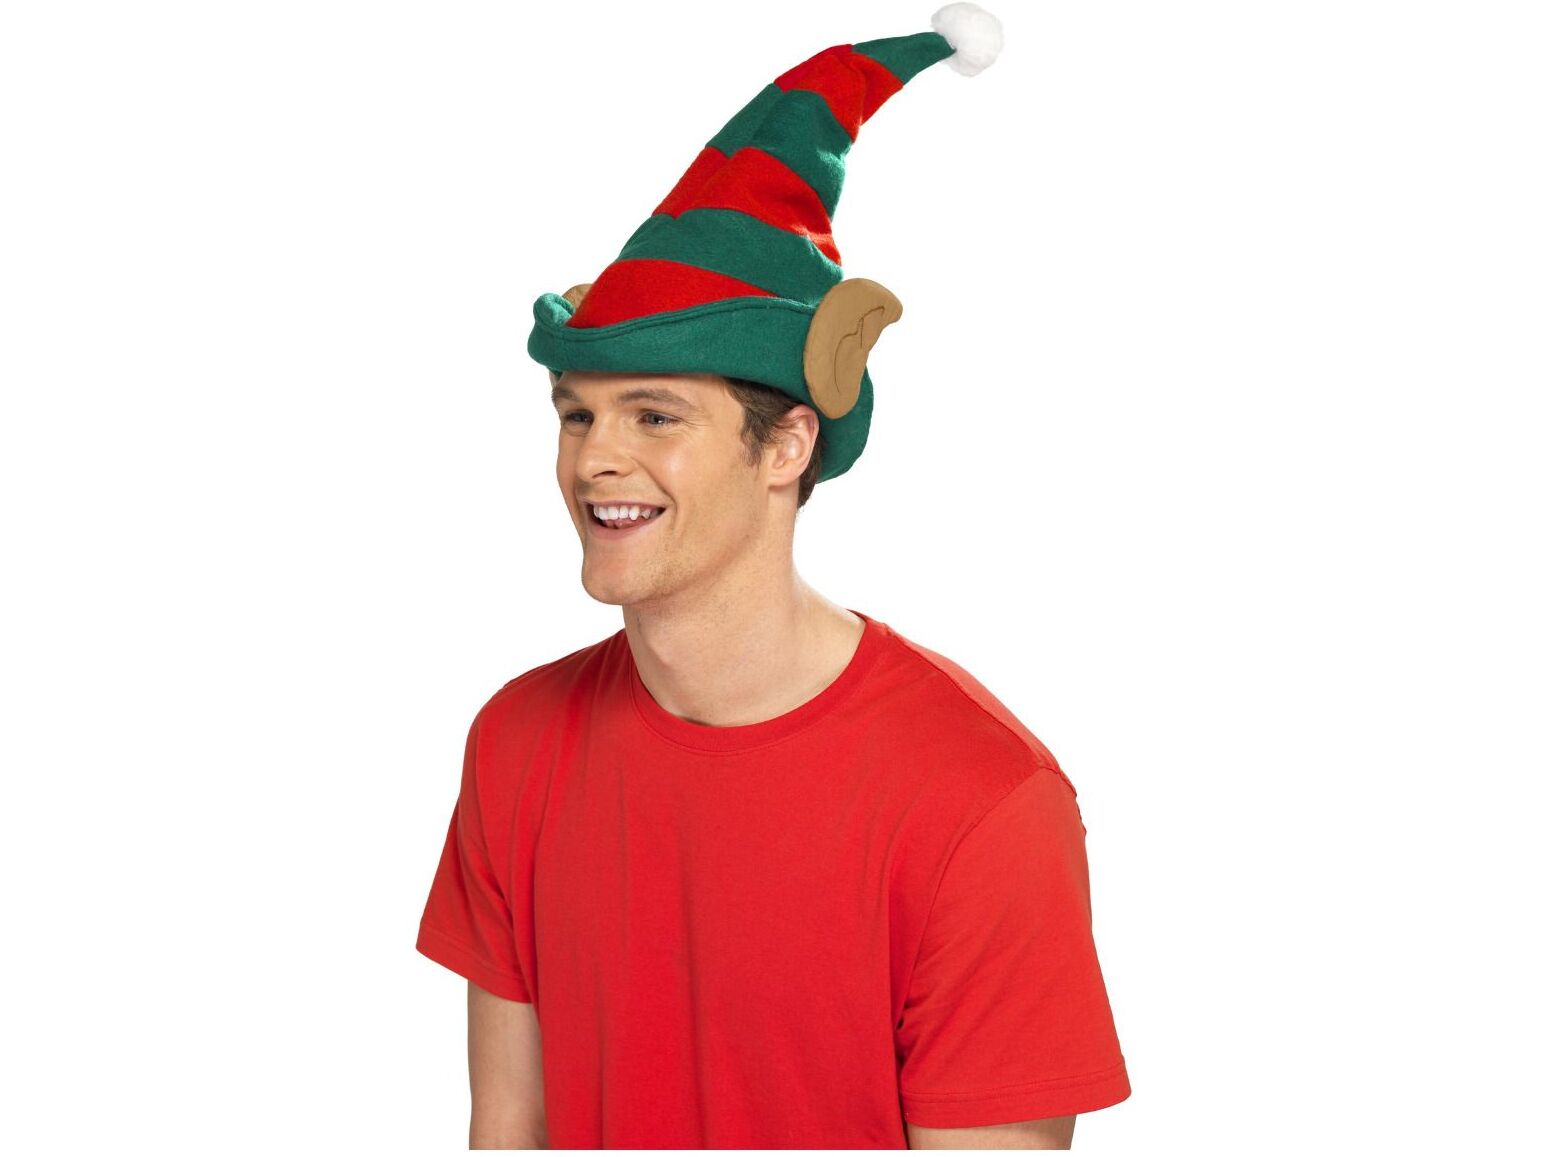 Čepice Elf s ušima